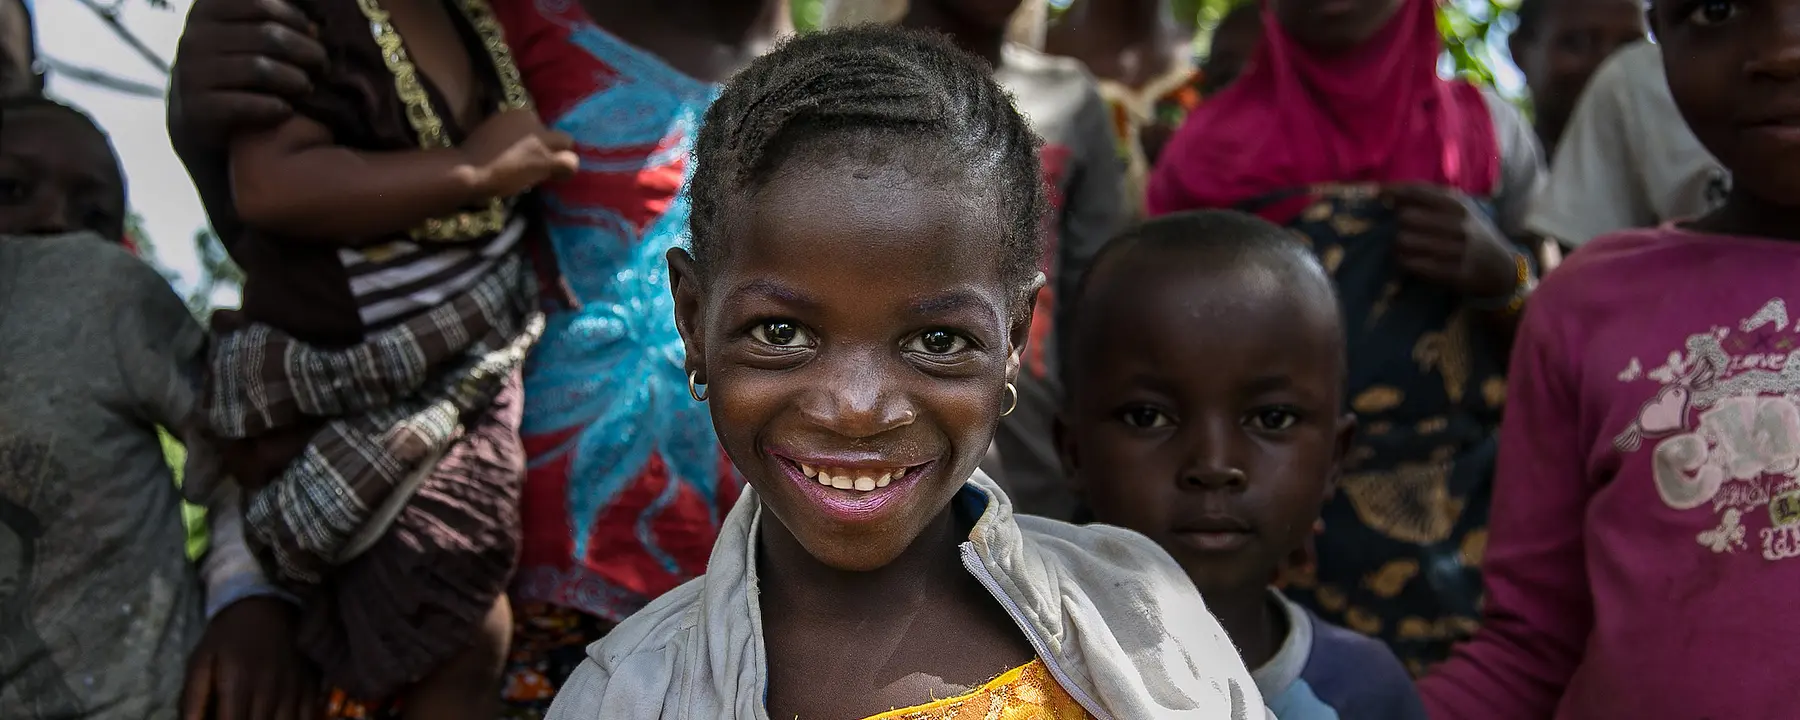 Girl in Kalan, Guinea smiles at the camera.